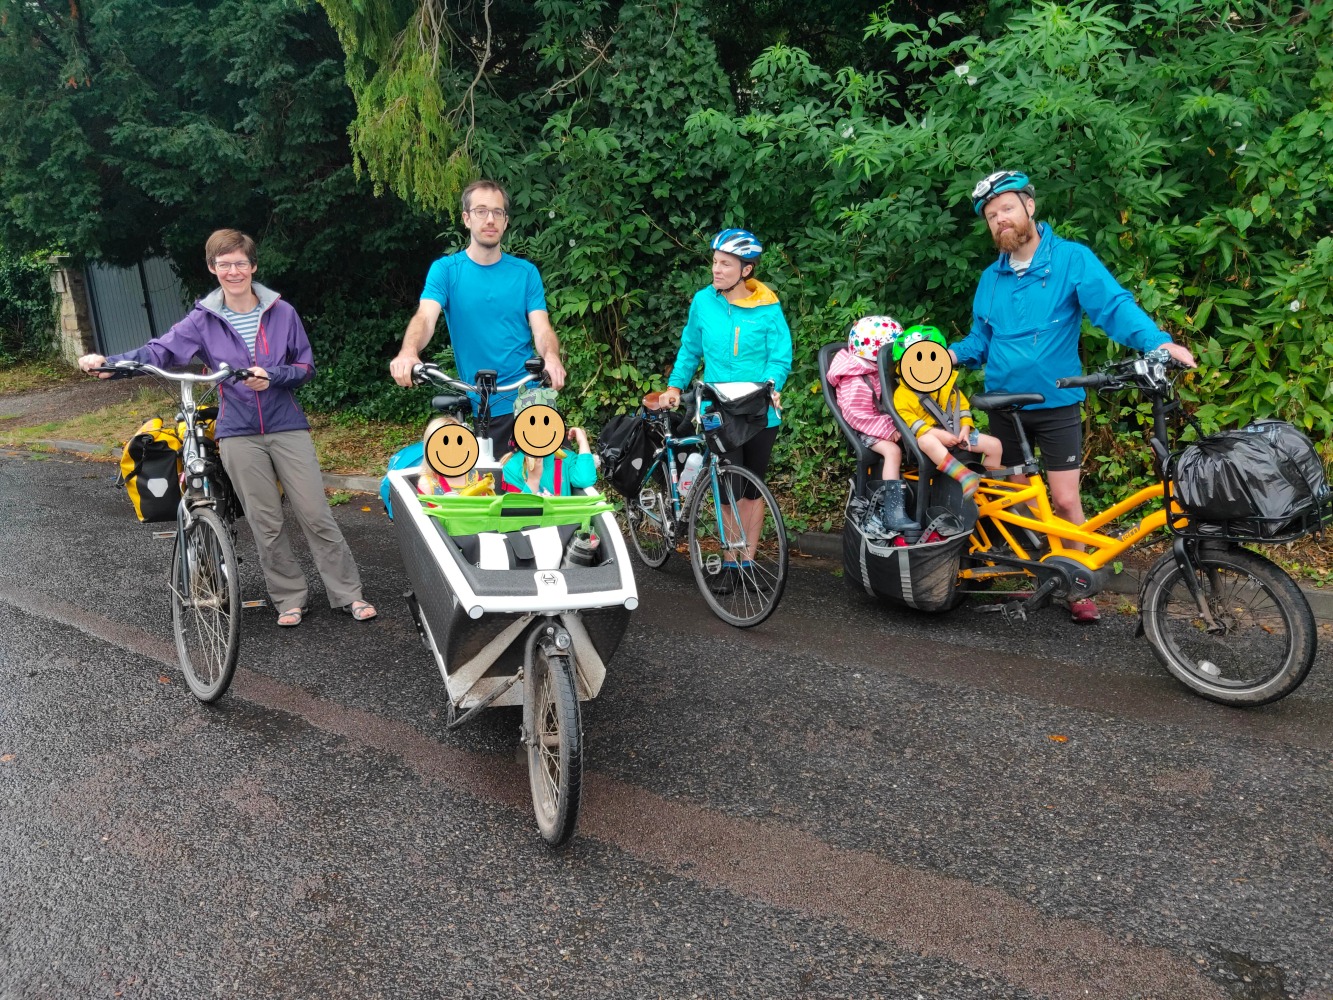 Two families on four bikes, including 1 longtail bike, 1 box bike.